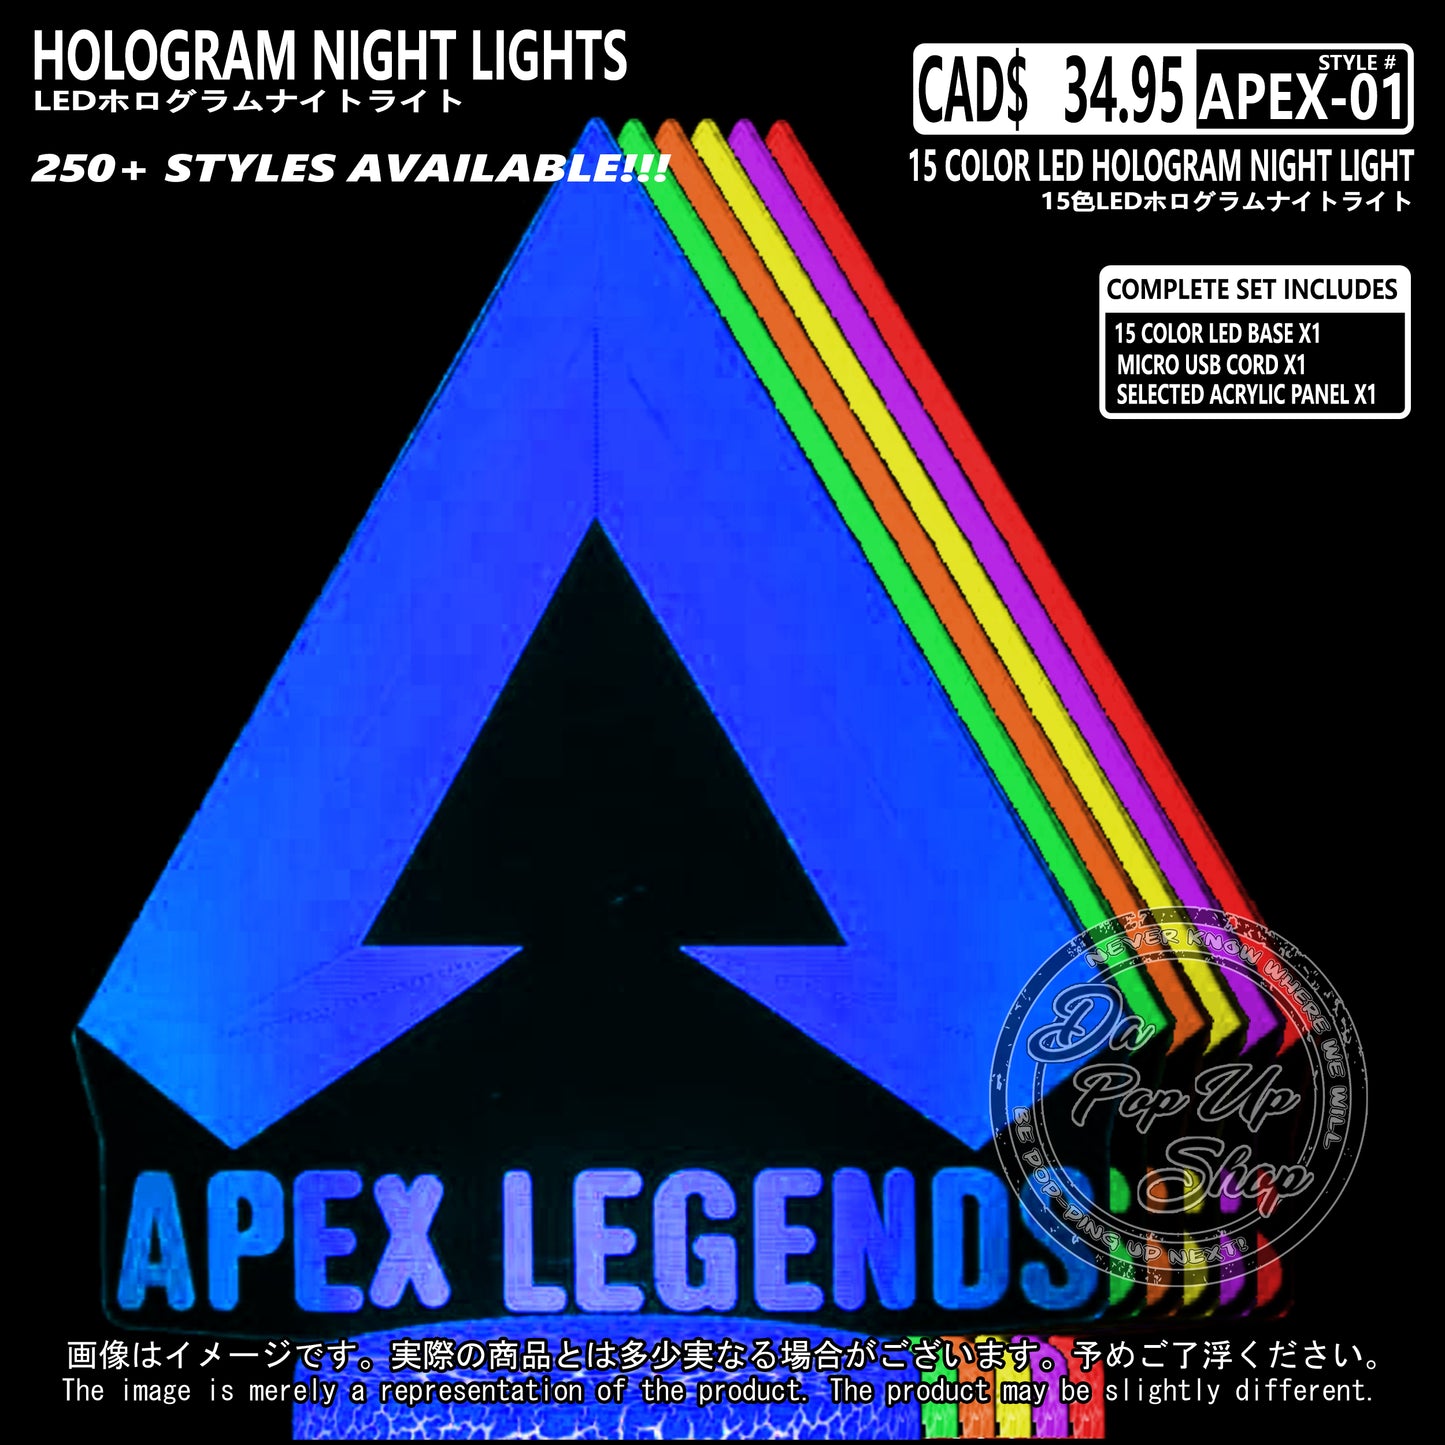 (APEX-01) Apex Legends Hologram LED Night Light